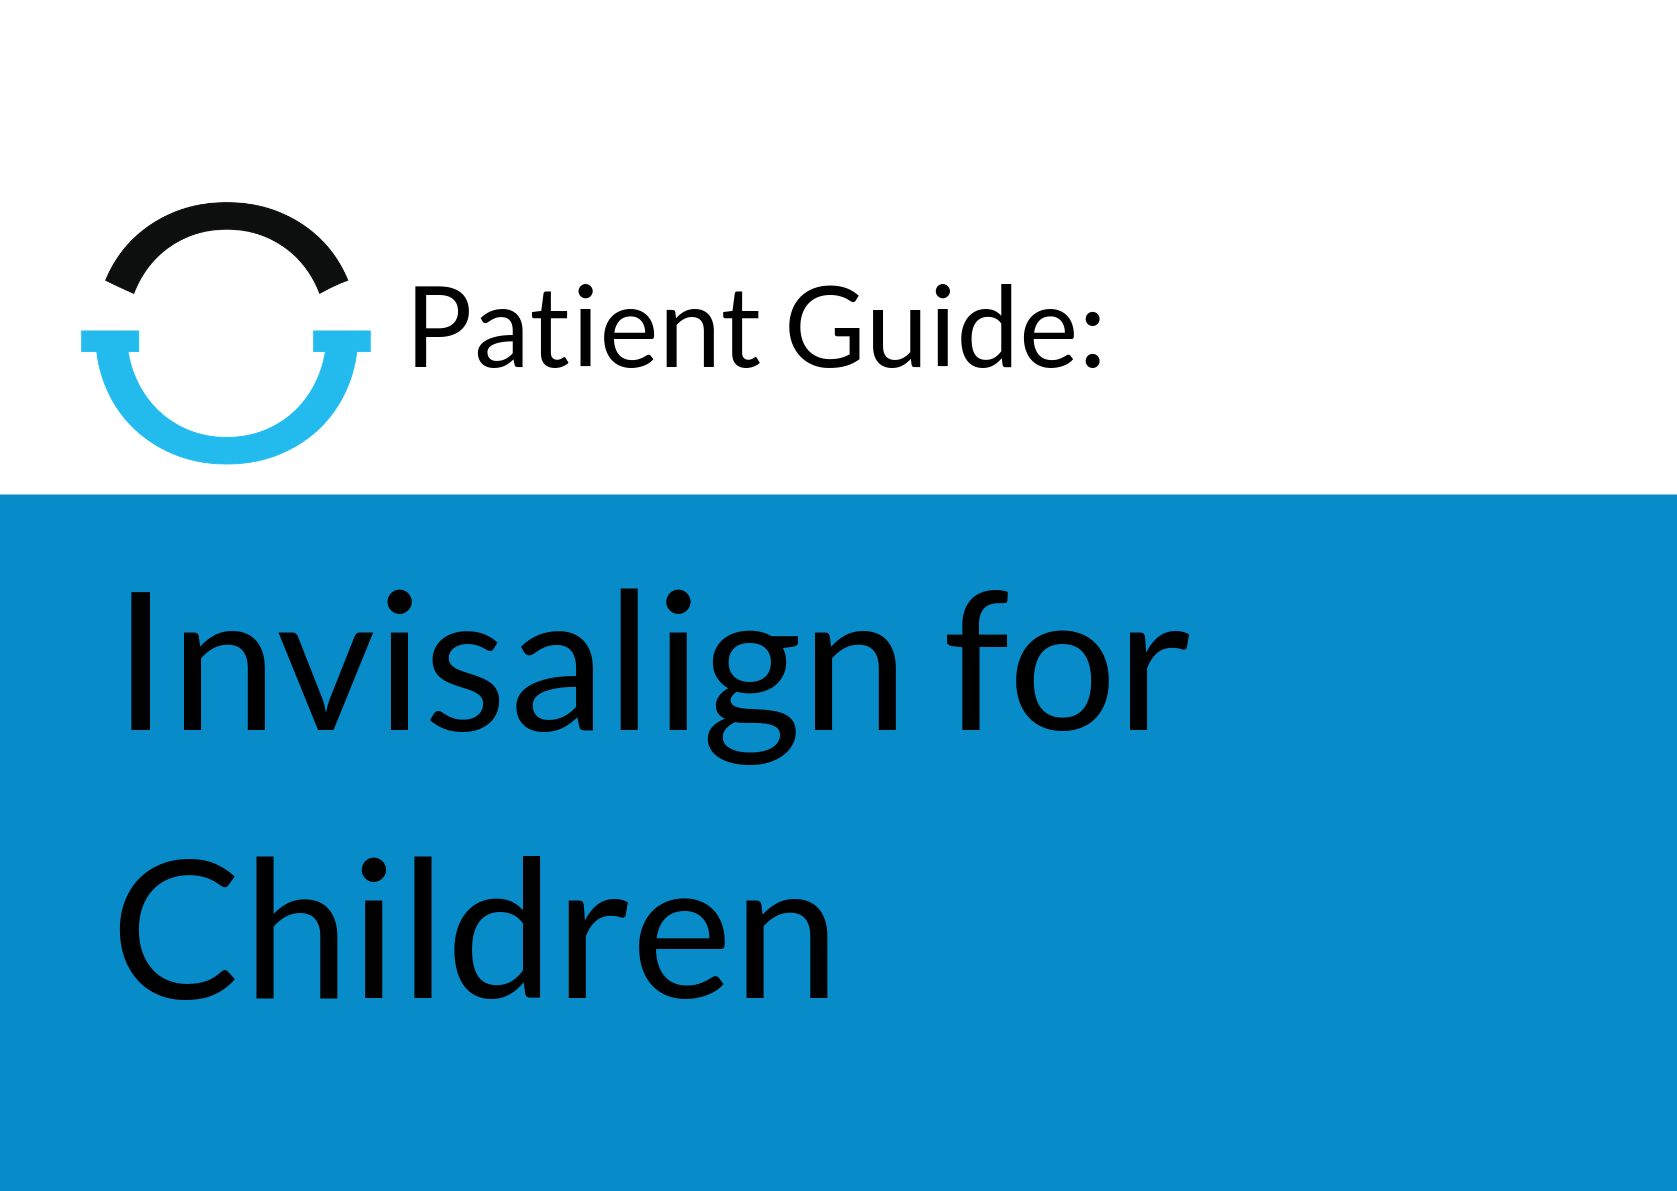 Patient Guide Header Image – Invisalign for Children LARGE